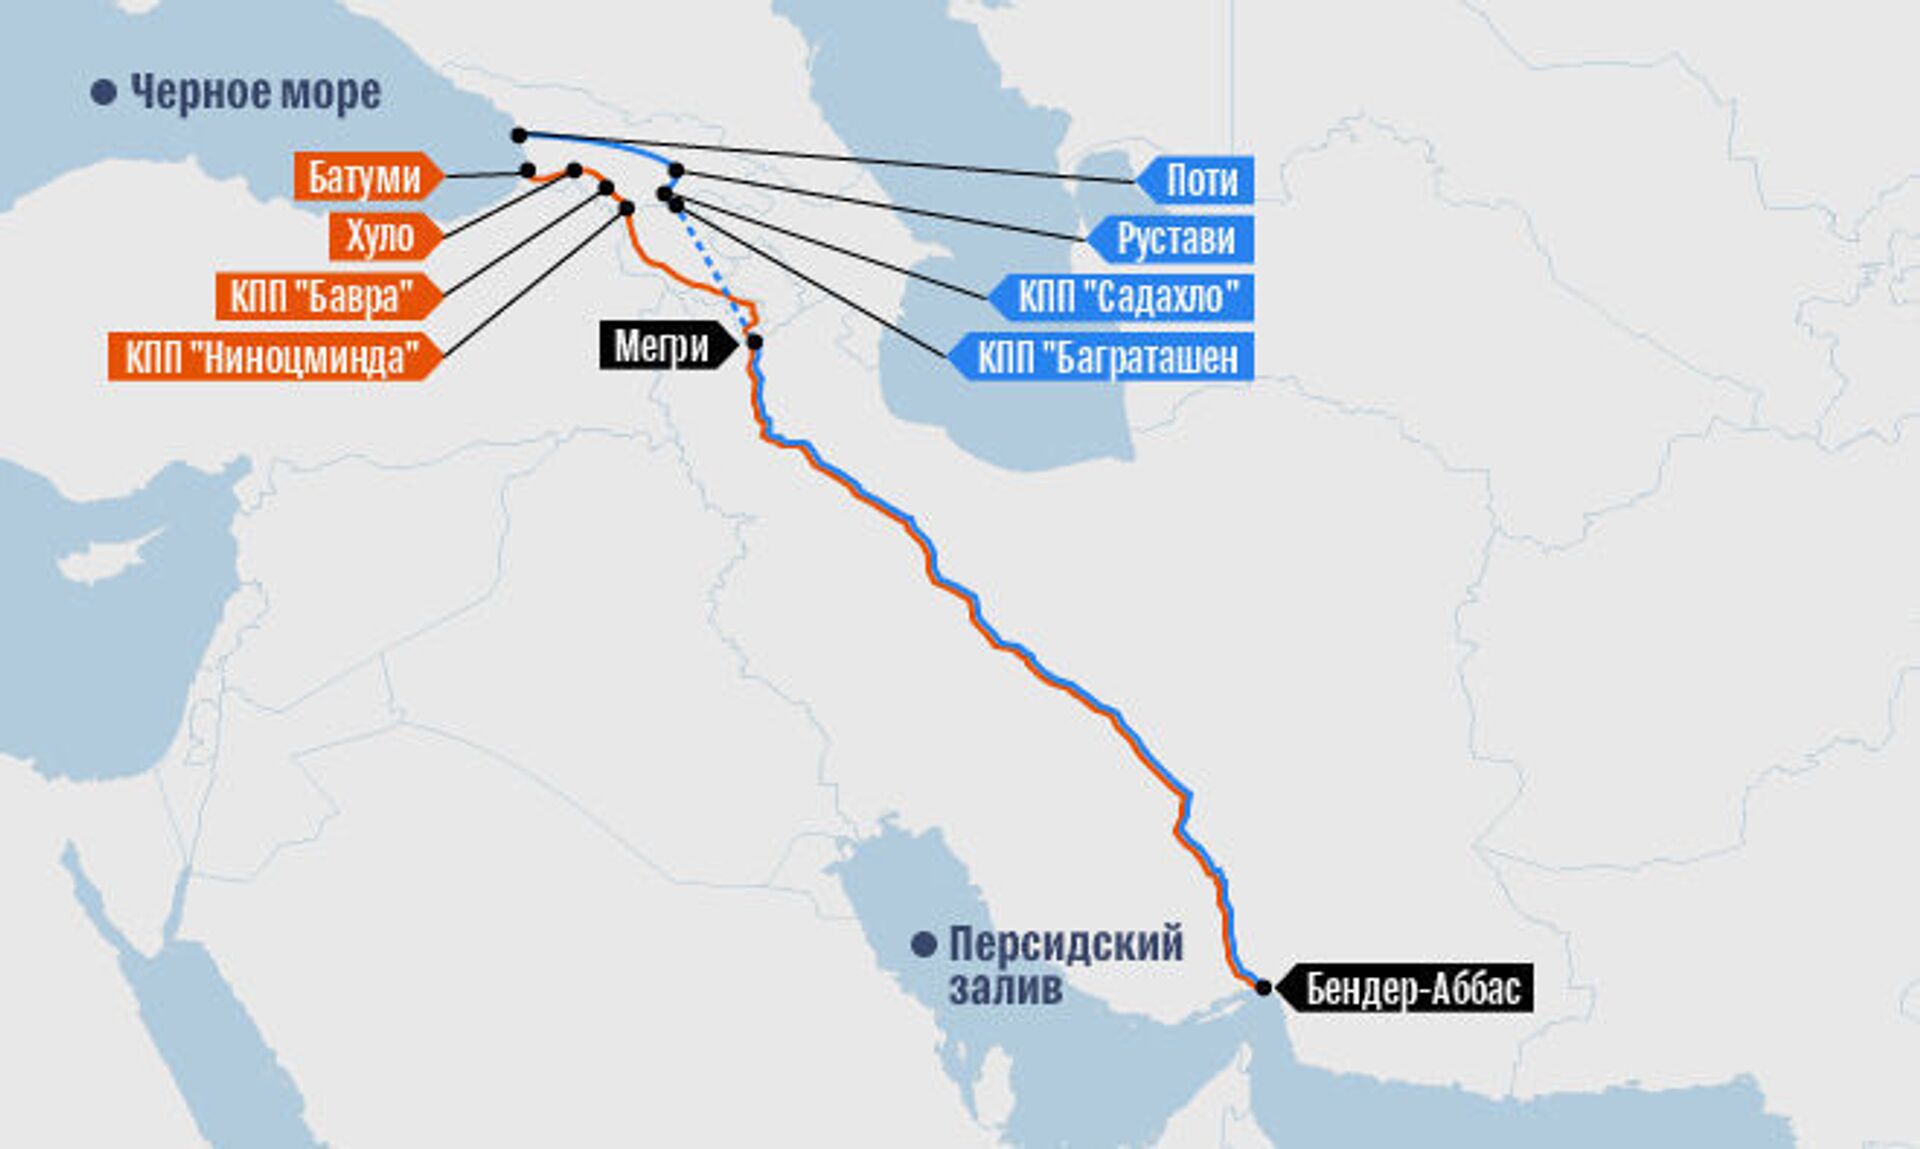 Коридор Персидский залив – Черное море: Тегеран делает ставку на Ереван, а не на Баку - Sputnik Армения, 1920, 19.05.2021